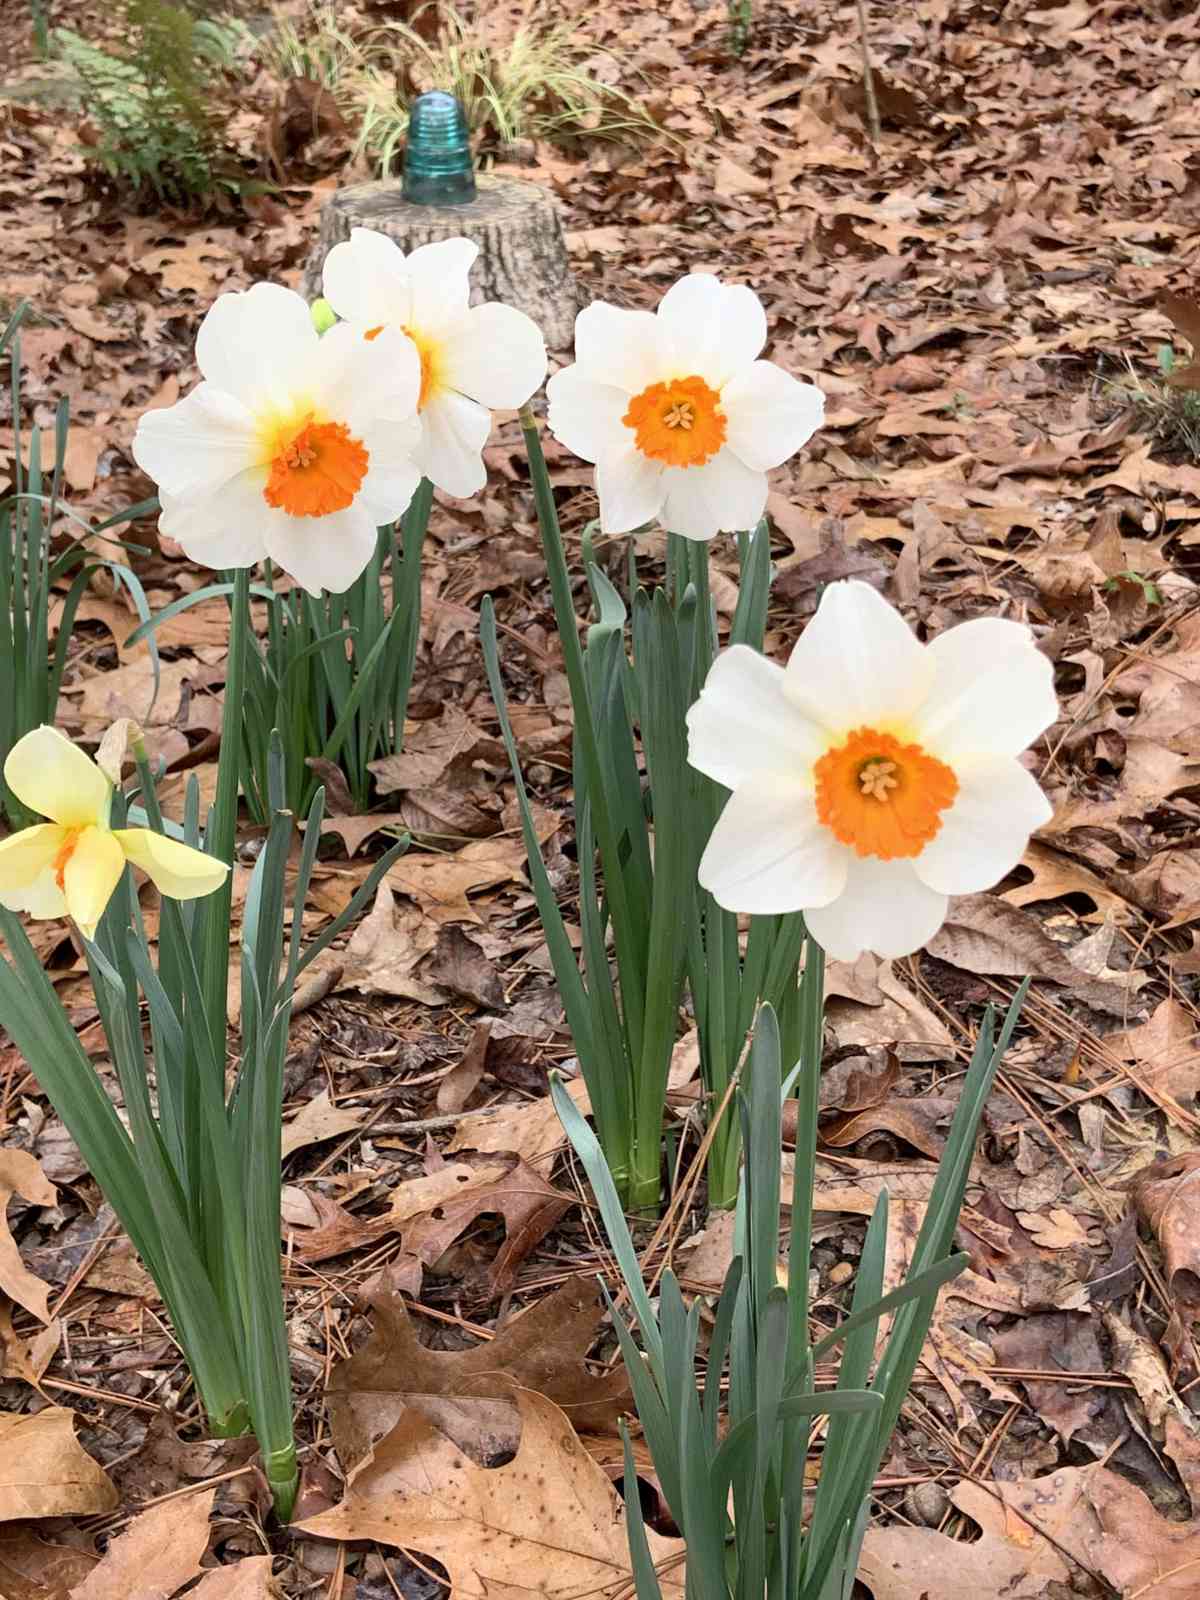 'Barrett Browning' daffodils